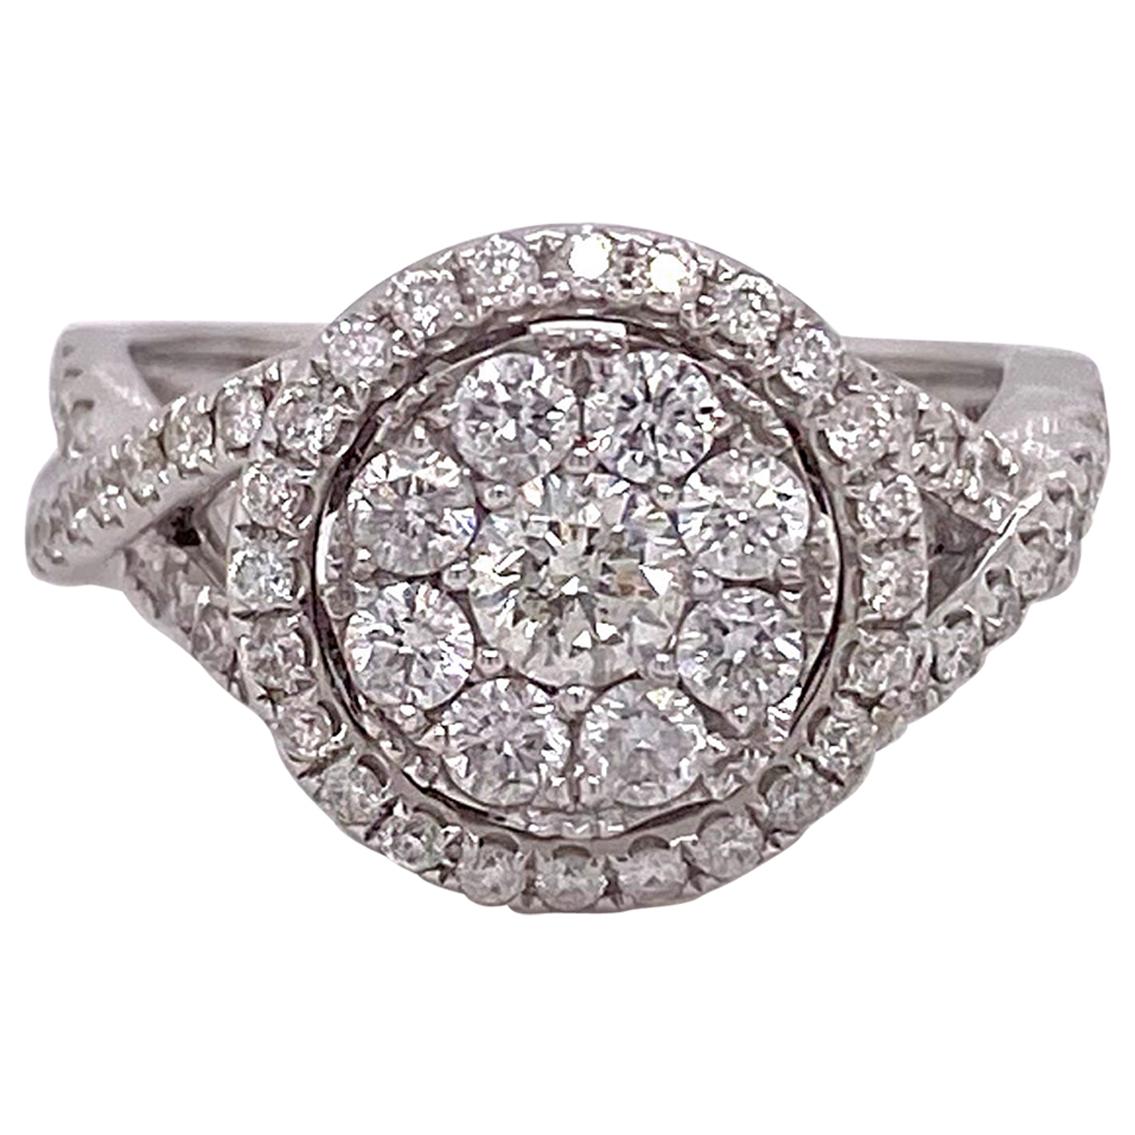 1.00 Carat Pave Diamond and Halo Diamond Engagement Ring in 14 Karat White Gold